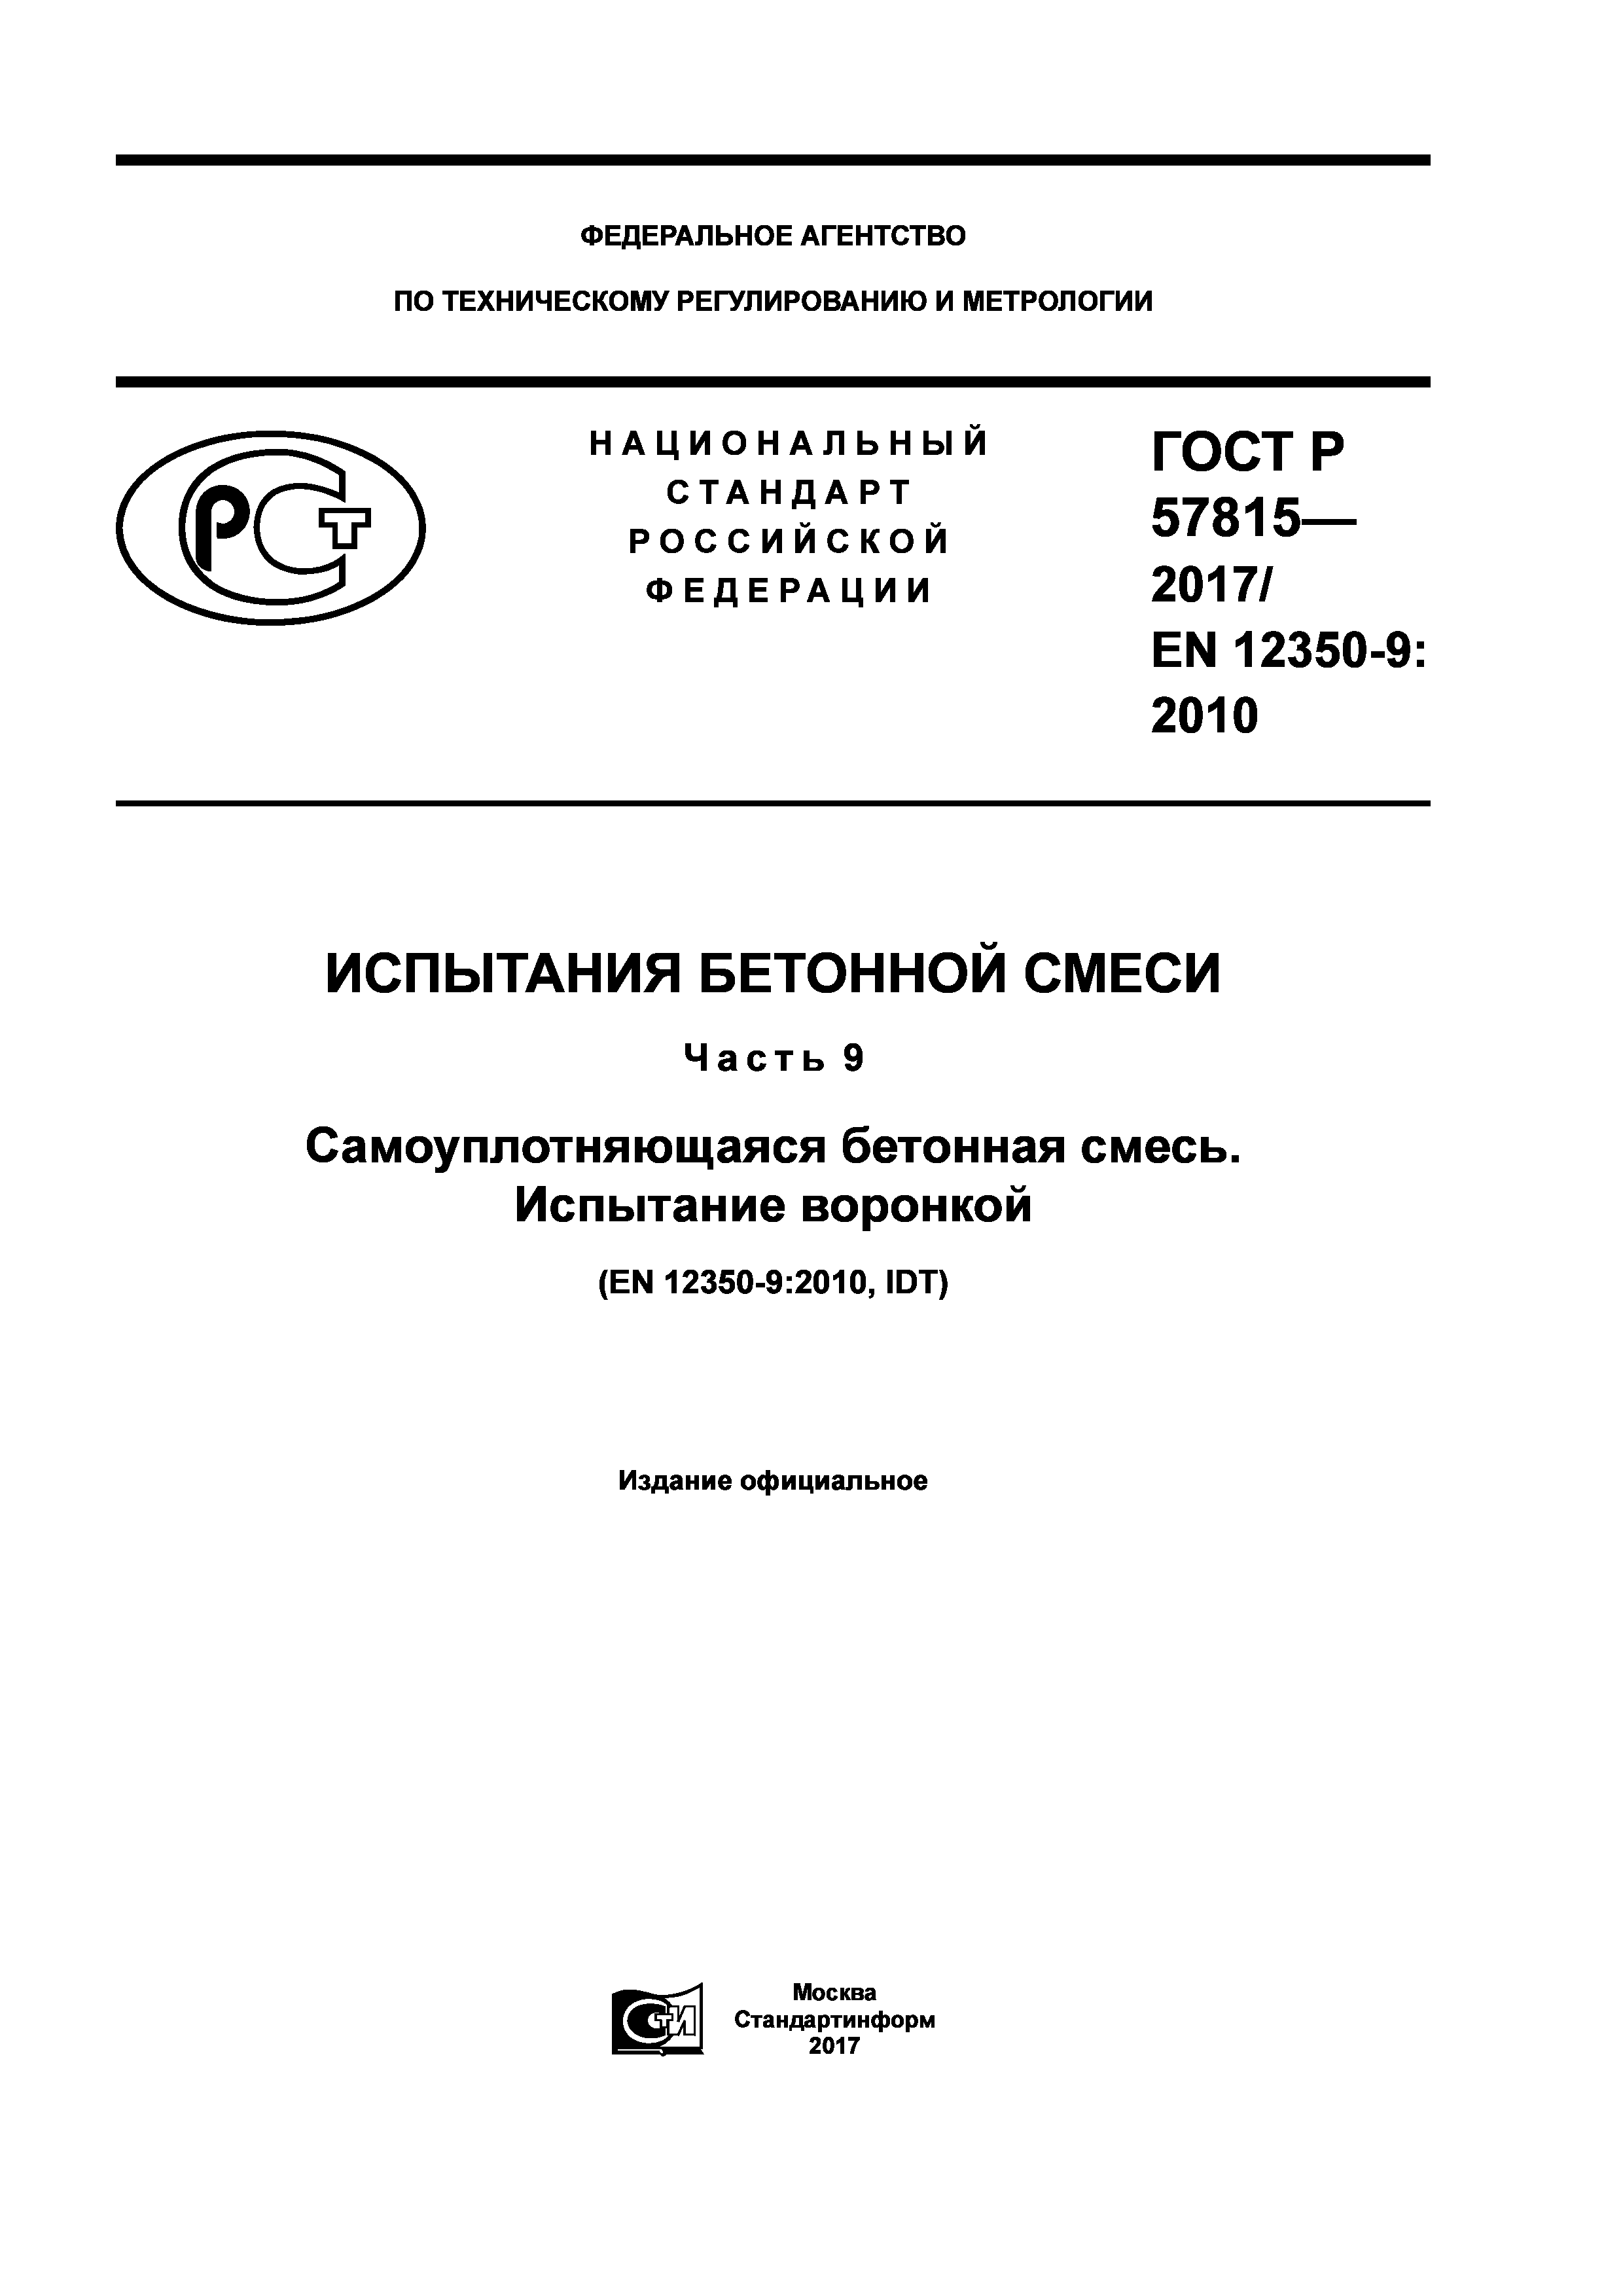 ГОСТ Р 57815-2017